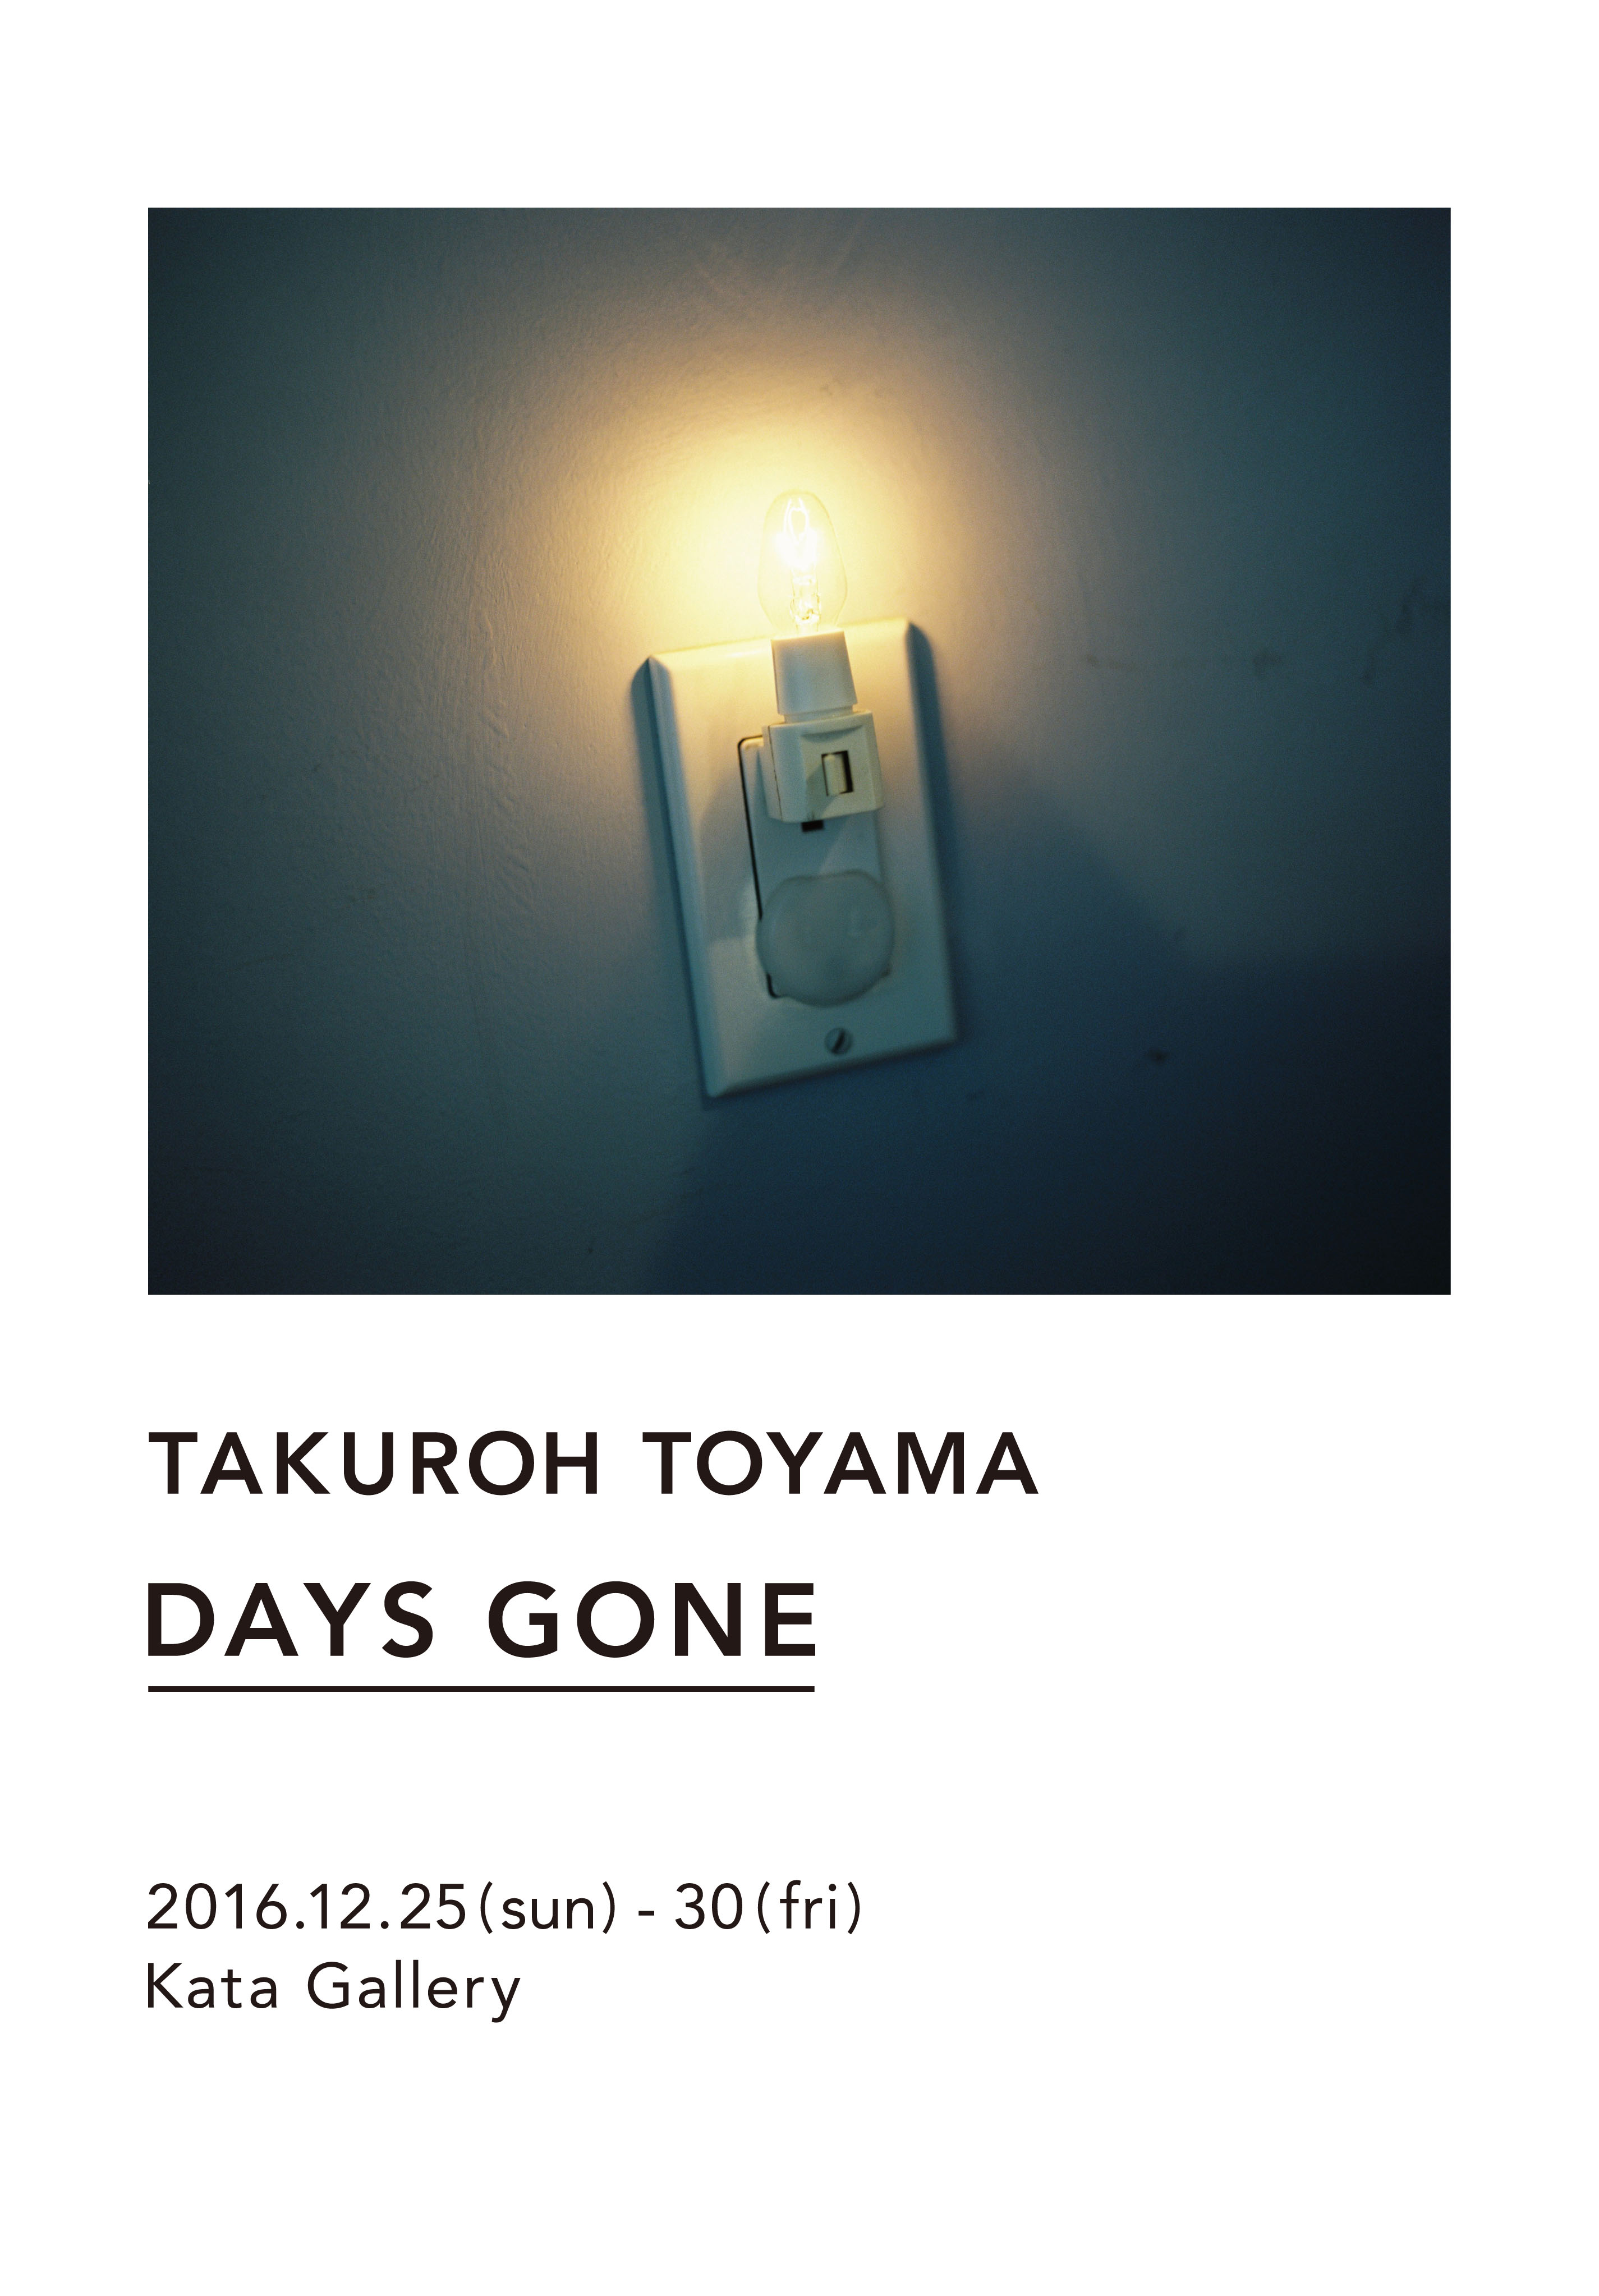 Takuroh Toyama Photo Exhibition 『DAYS GONE』